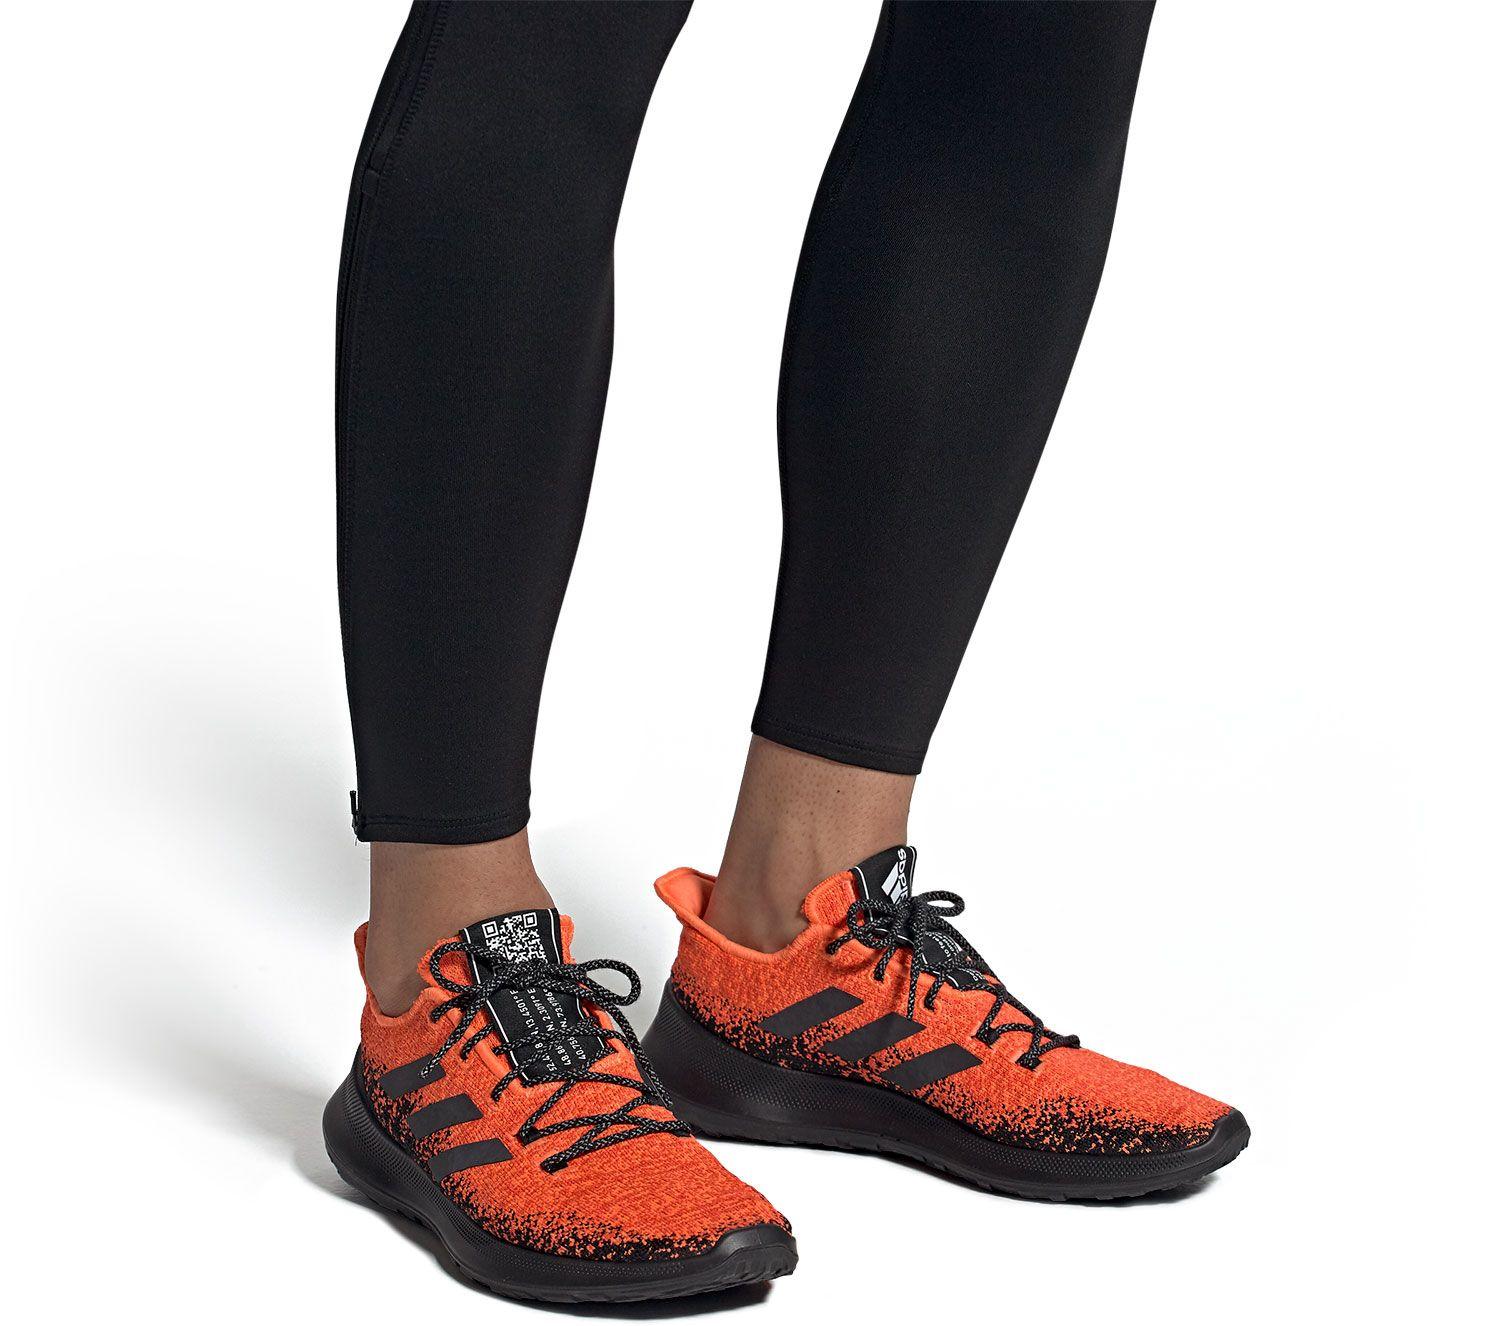 adidas Sensebounce+ Running Shoes in Orange/Black (Black) for Men - Lyst